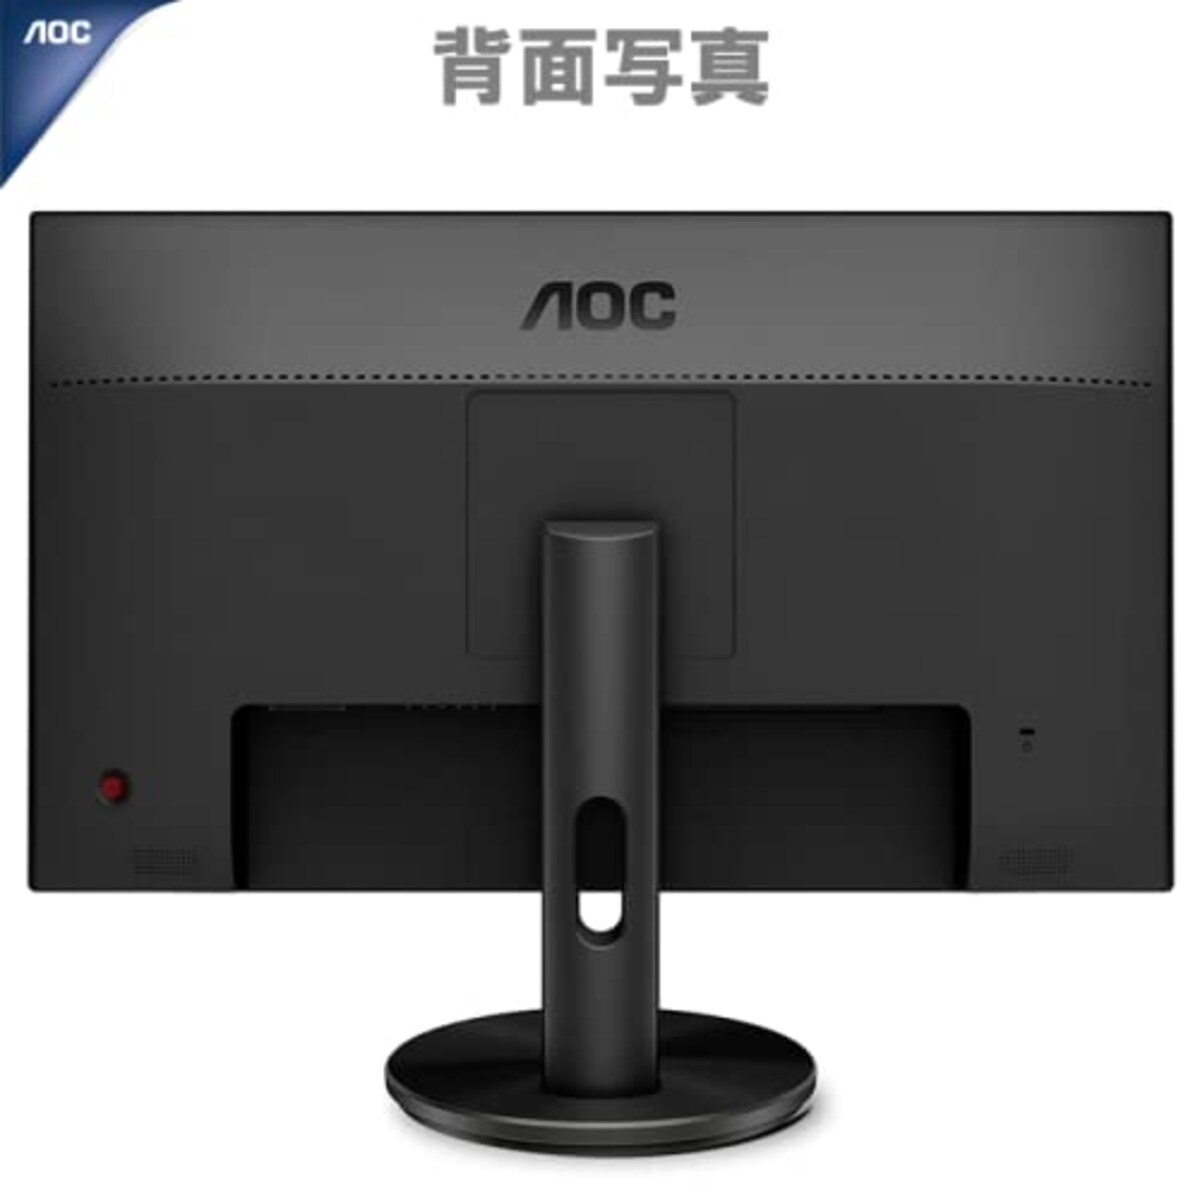  AOC ゲーミング モニター ディスプレイ G2490VX/11 (23.8インチ/ゲーミング/ 144Hz/1ms/VA/FHD/DP/HDMI1.4 x 1/DP1.2 x1)画像4 